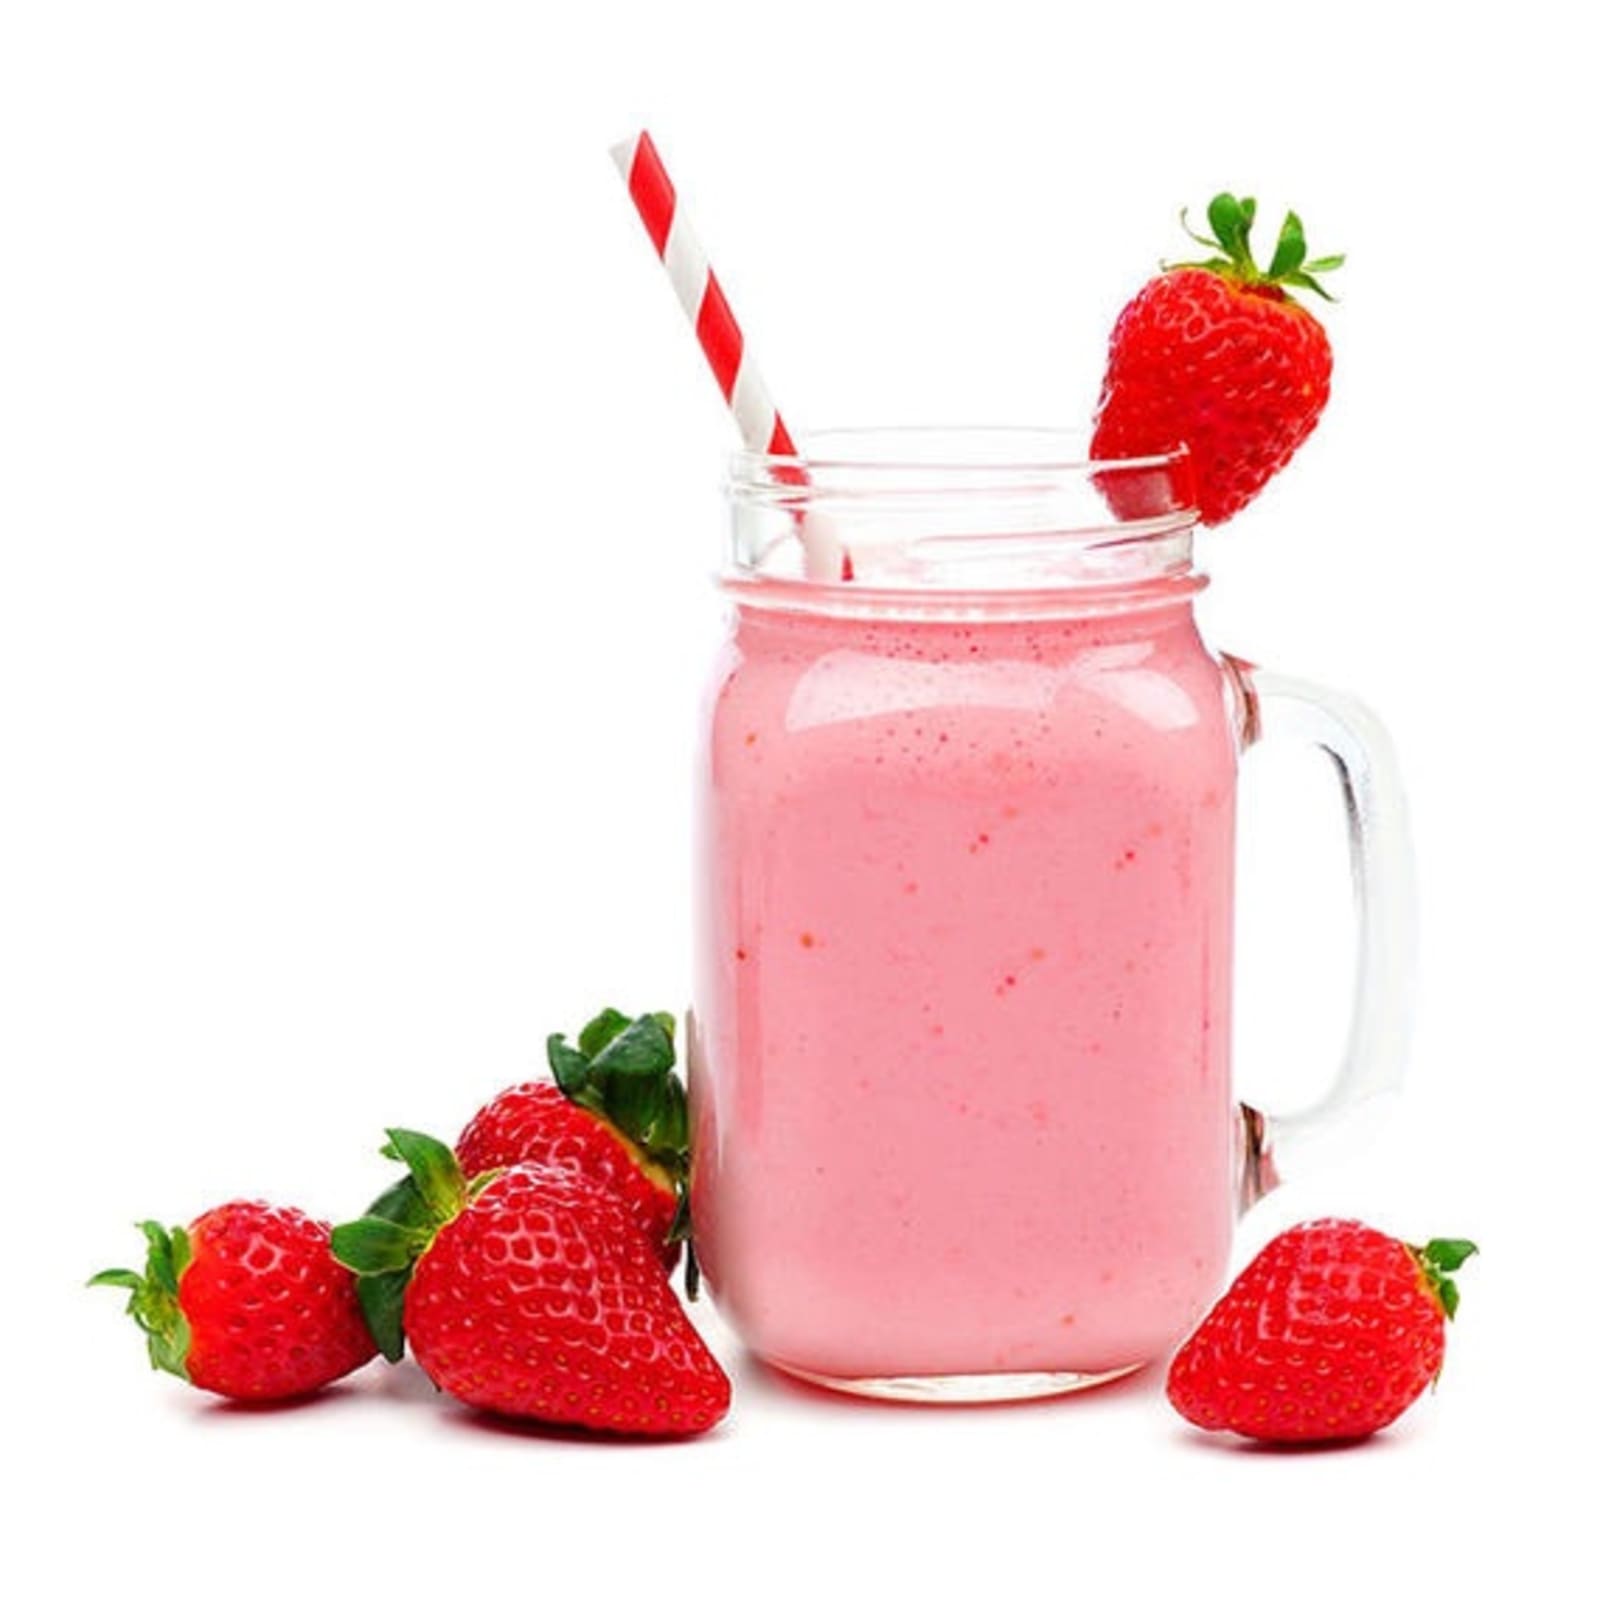 strawberry-milkshake-with-paper-straw.jpg